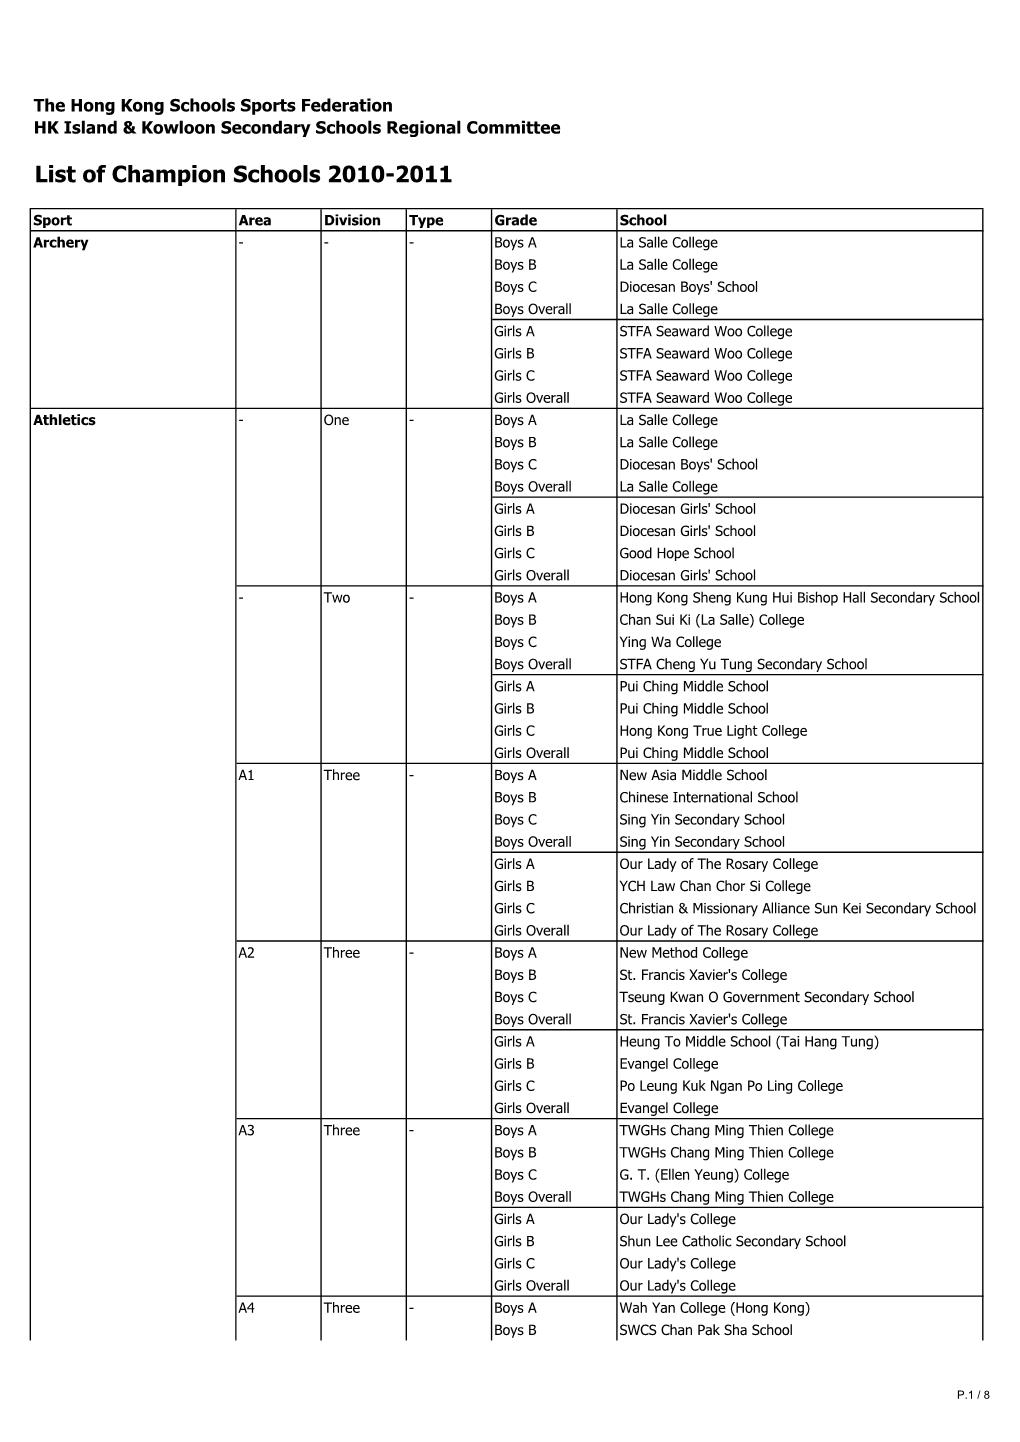 List of Champion Schools 2010-2011